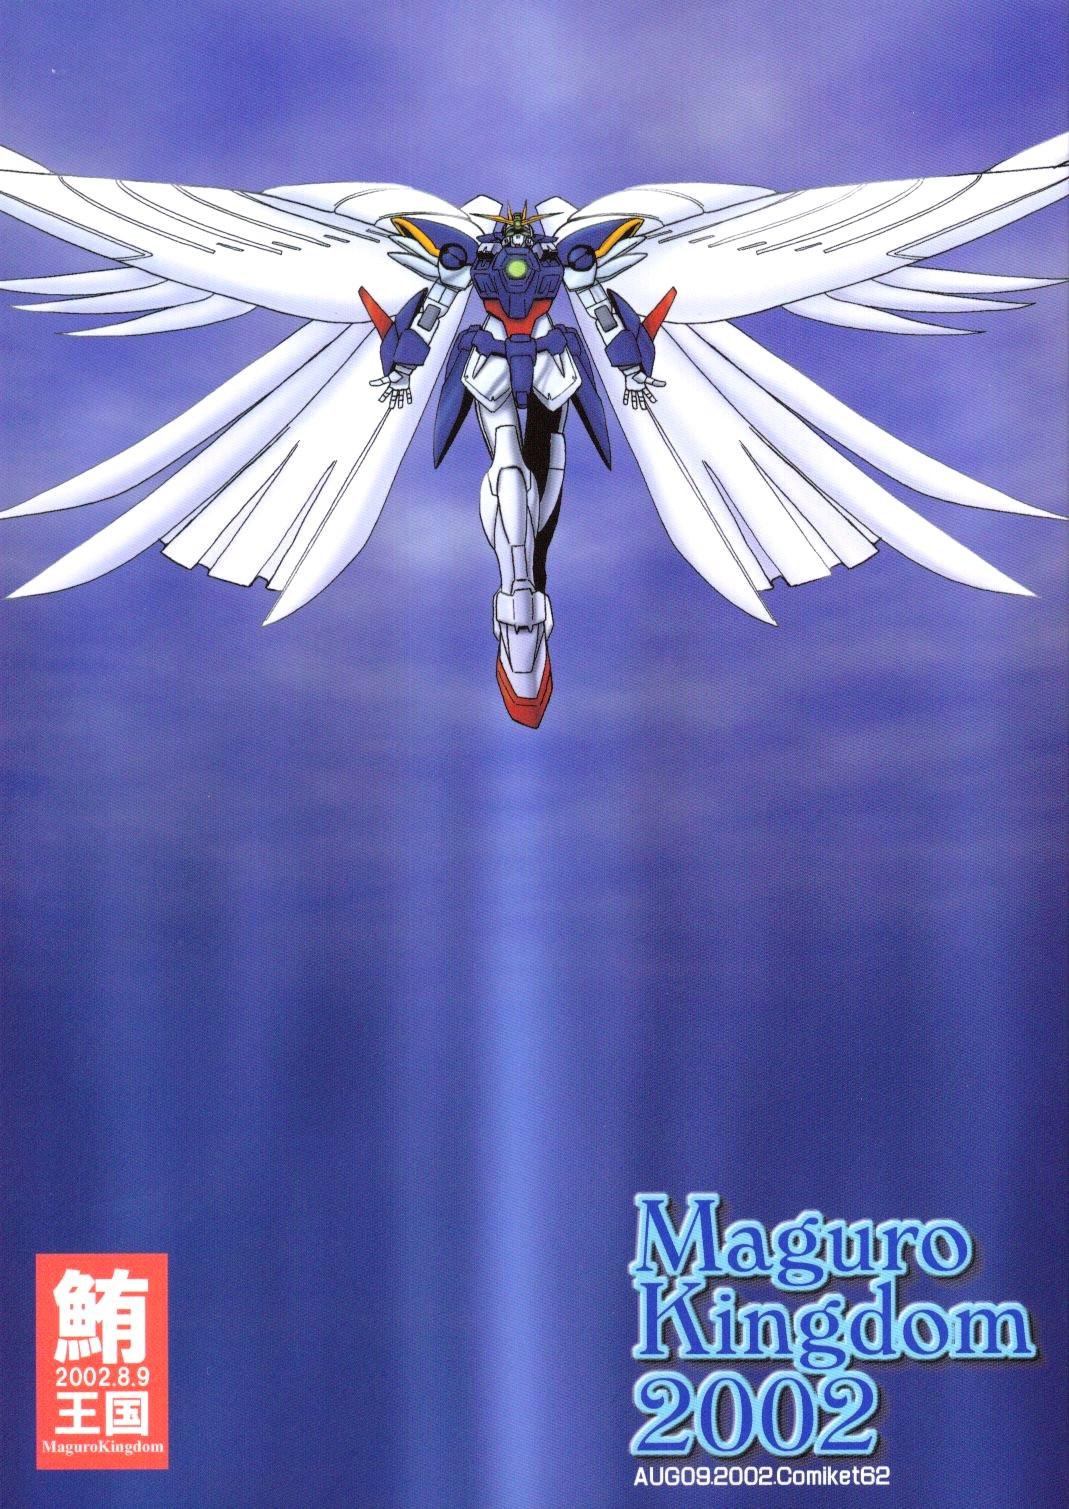 Maguro Kingdom 2002 0